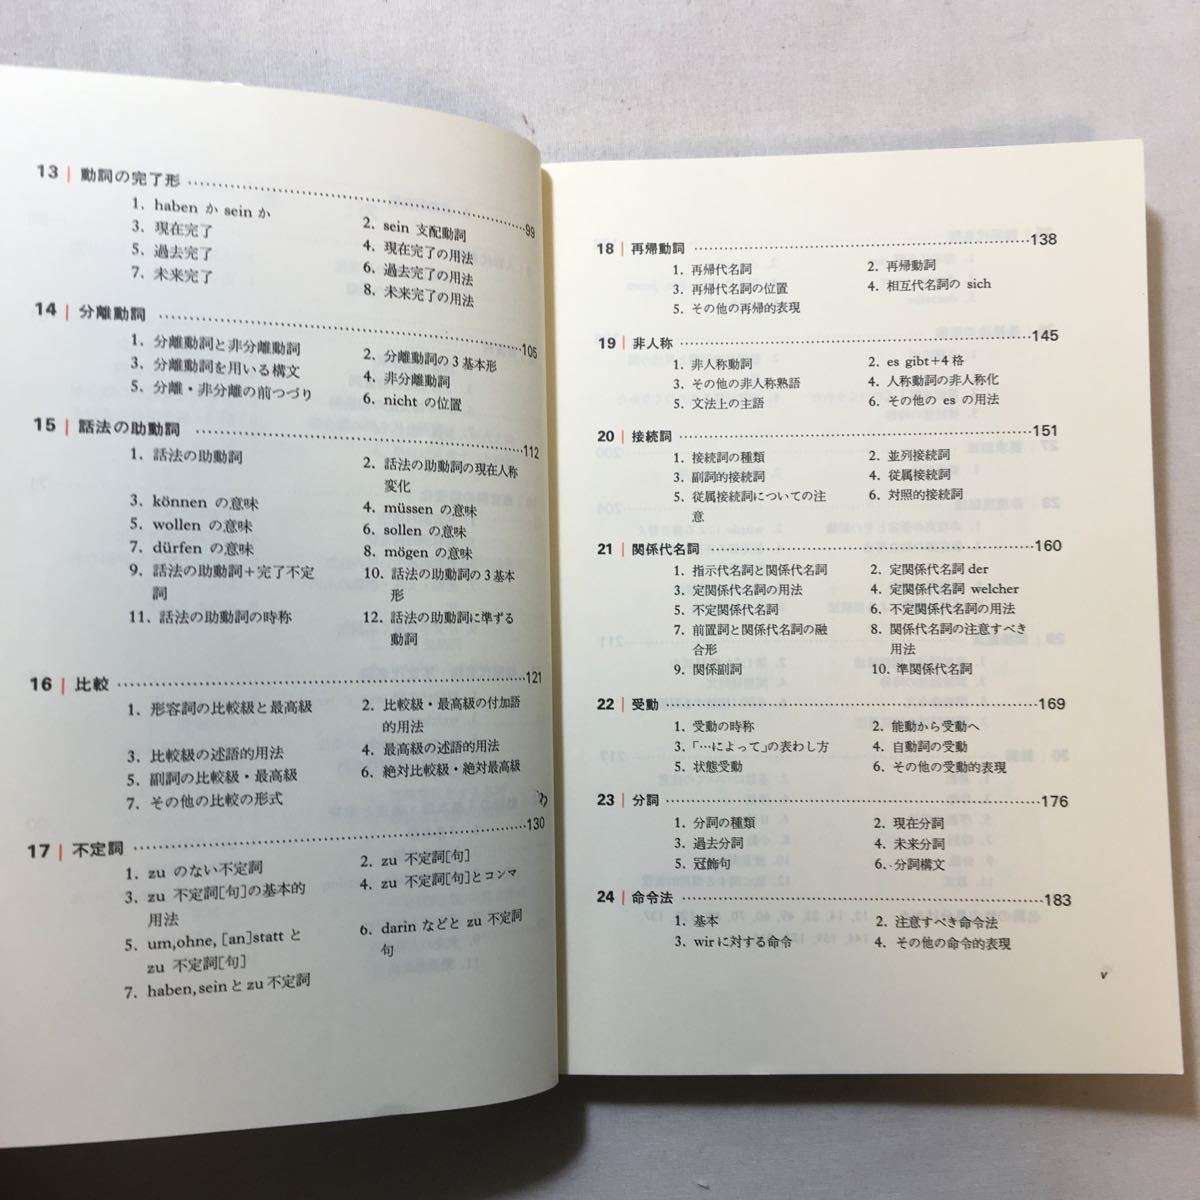 zaa-495♪よくわかるドイツ文法 単行本 1994/9/1 大岩信太郎 (著)朝日出版社